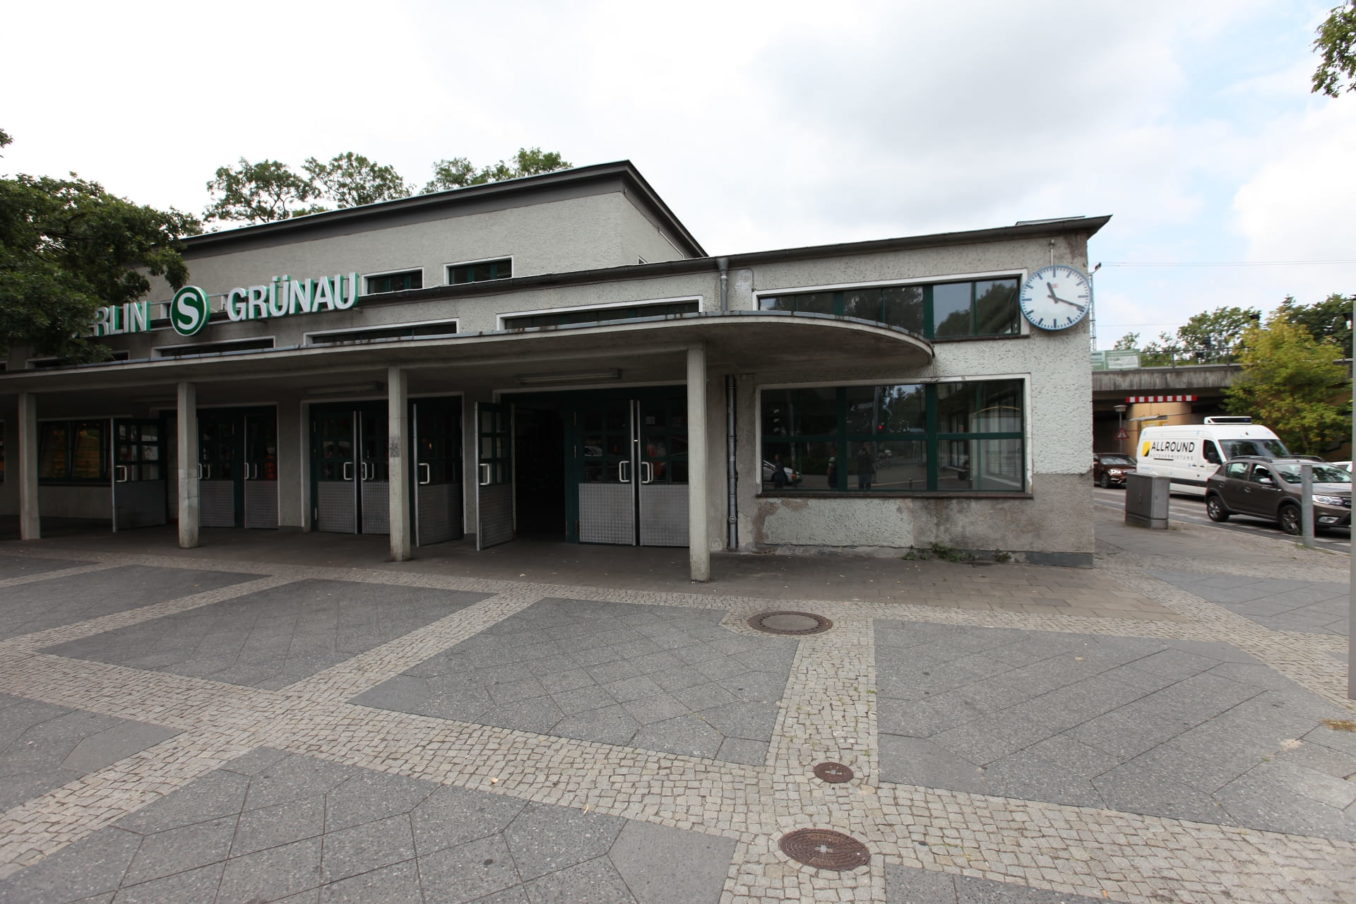 S-Bahnhof Berlin Grünau